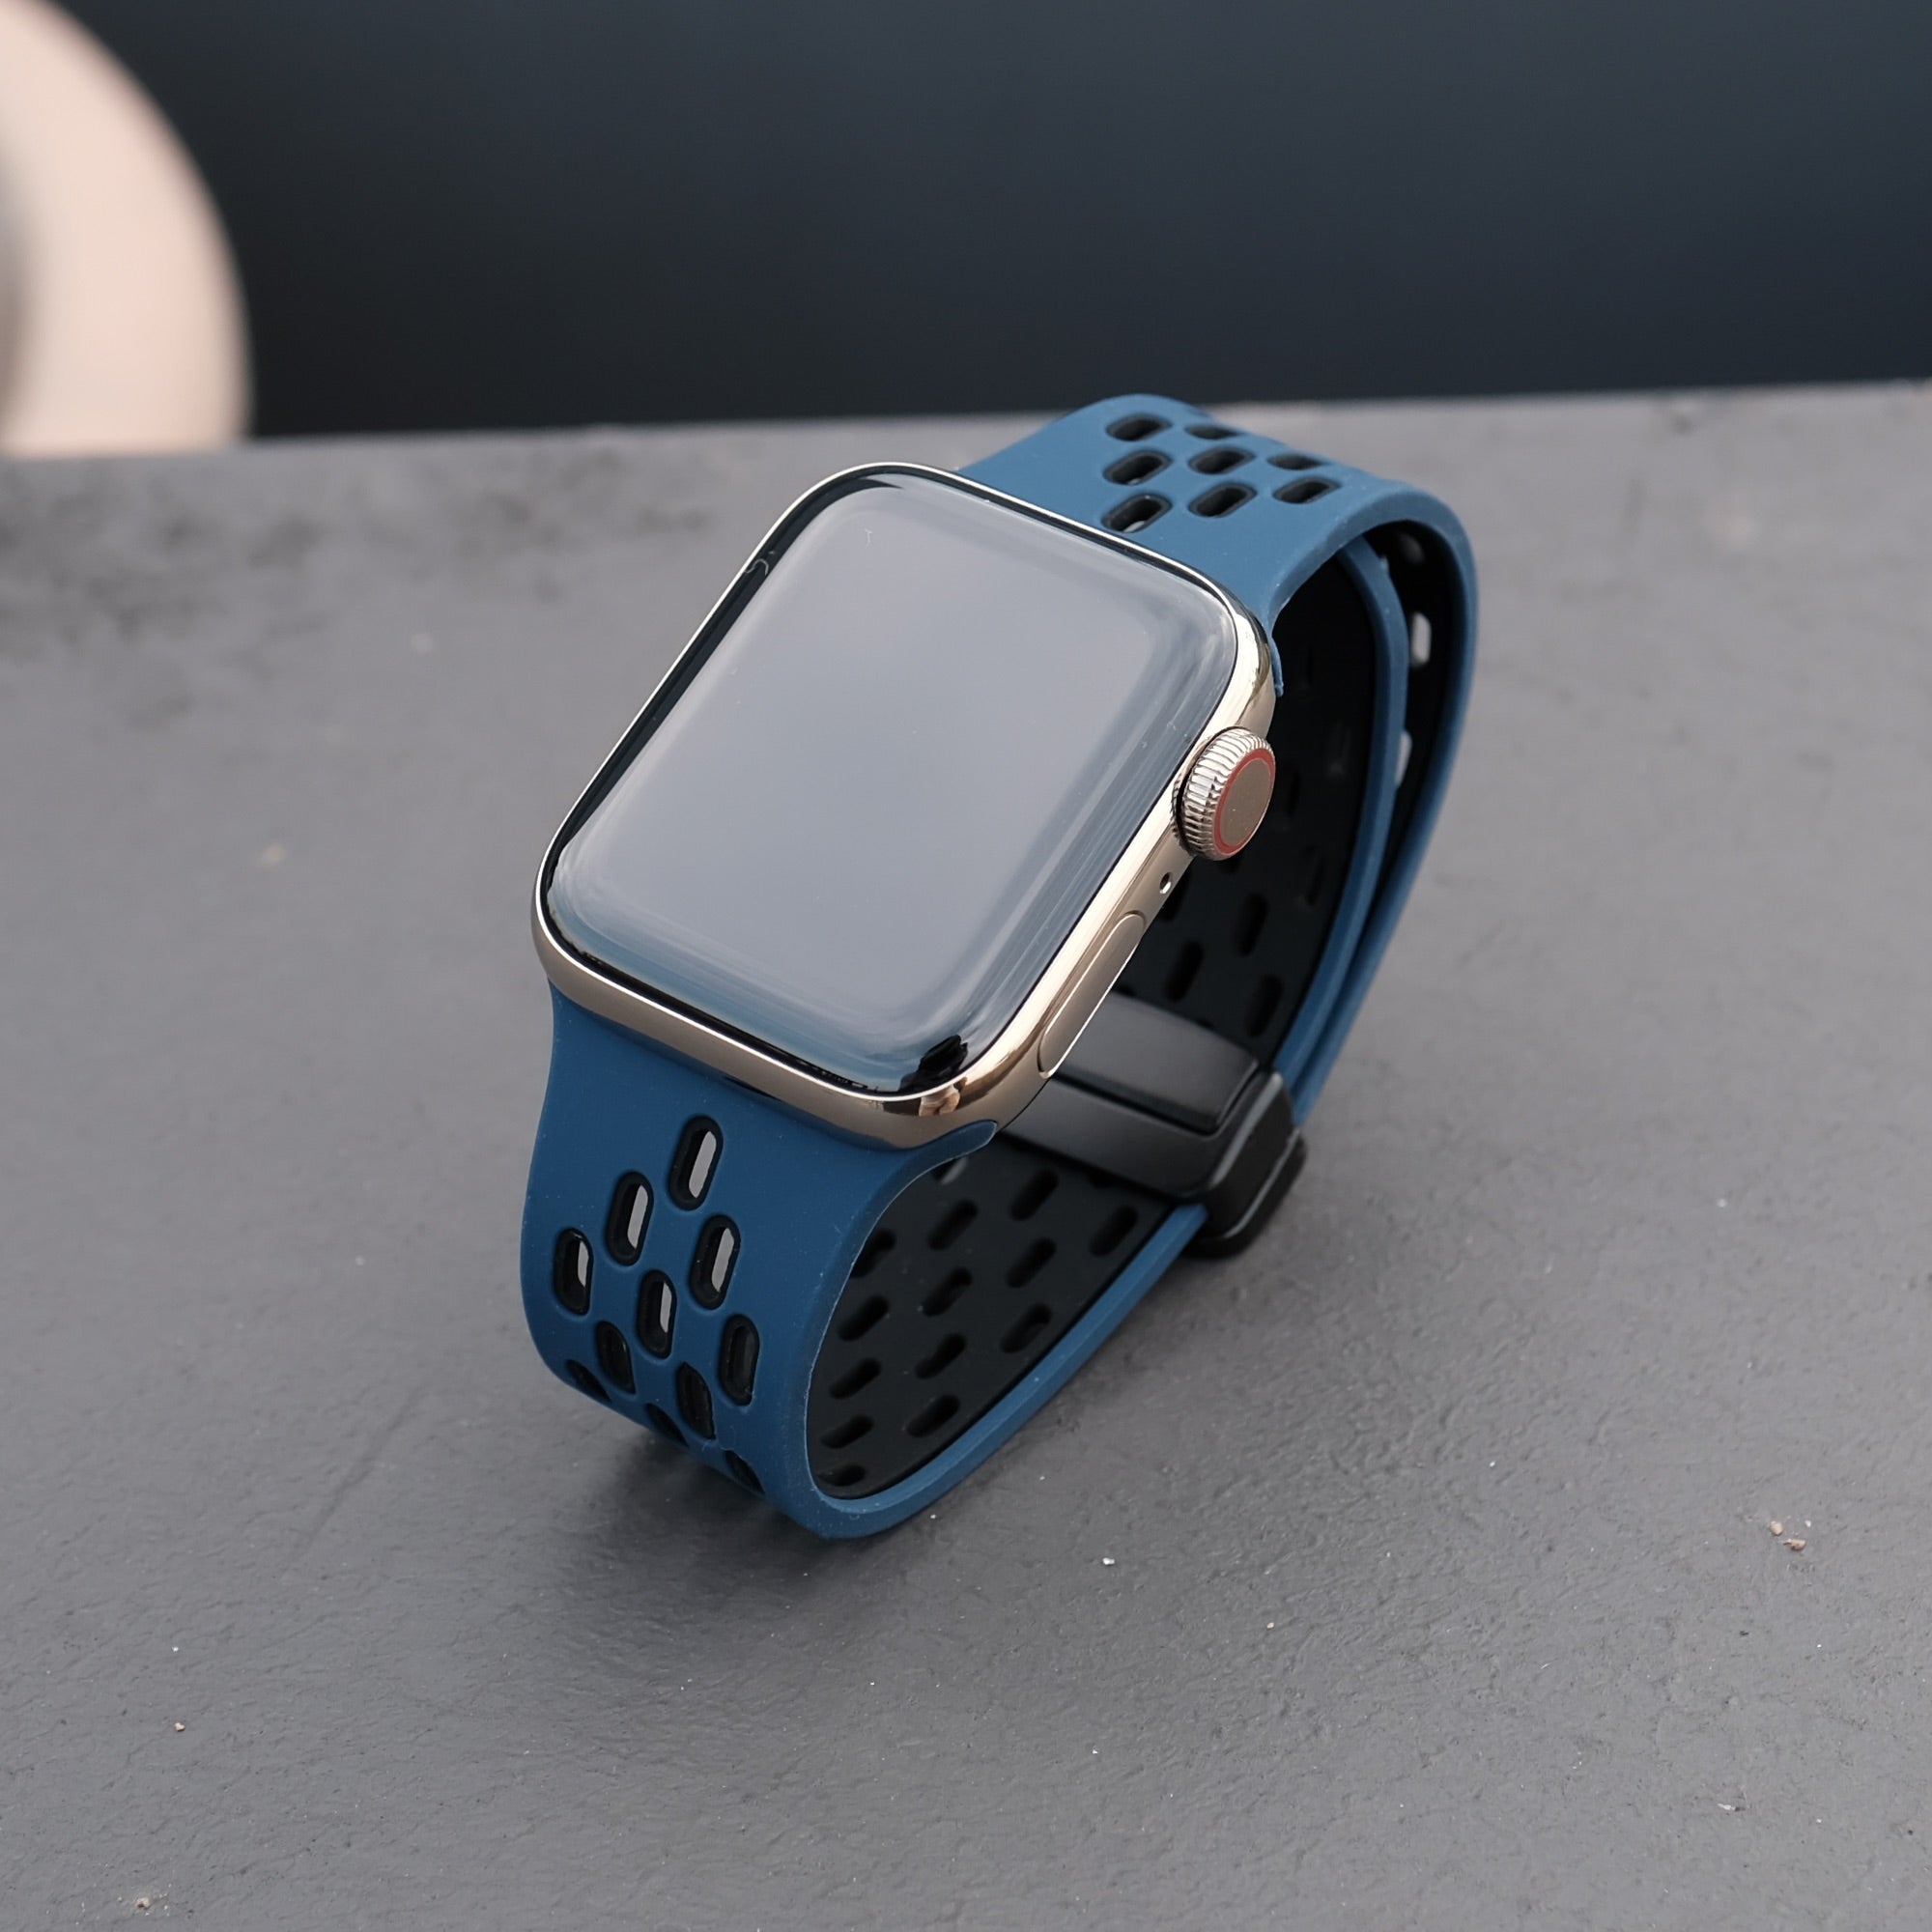 Pin and Buckle - Sport Flex LT Apple Watch Bands - Midnight Blue